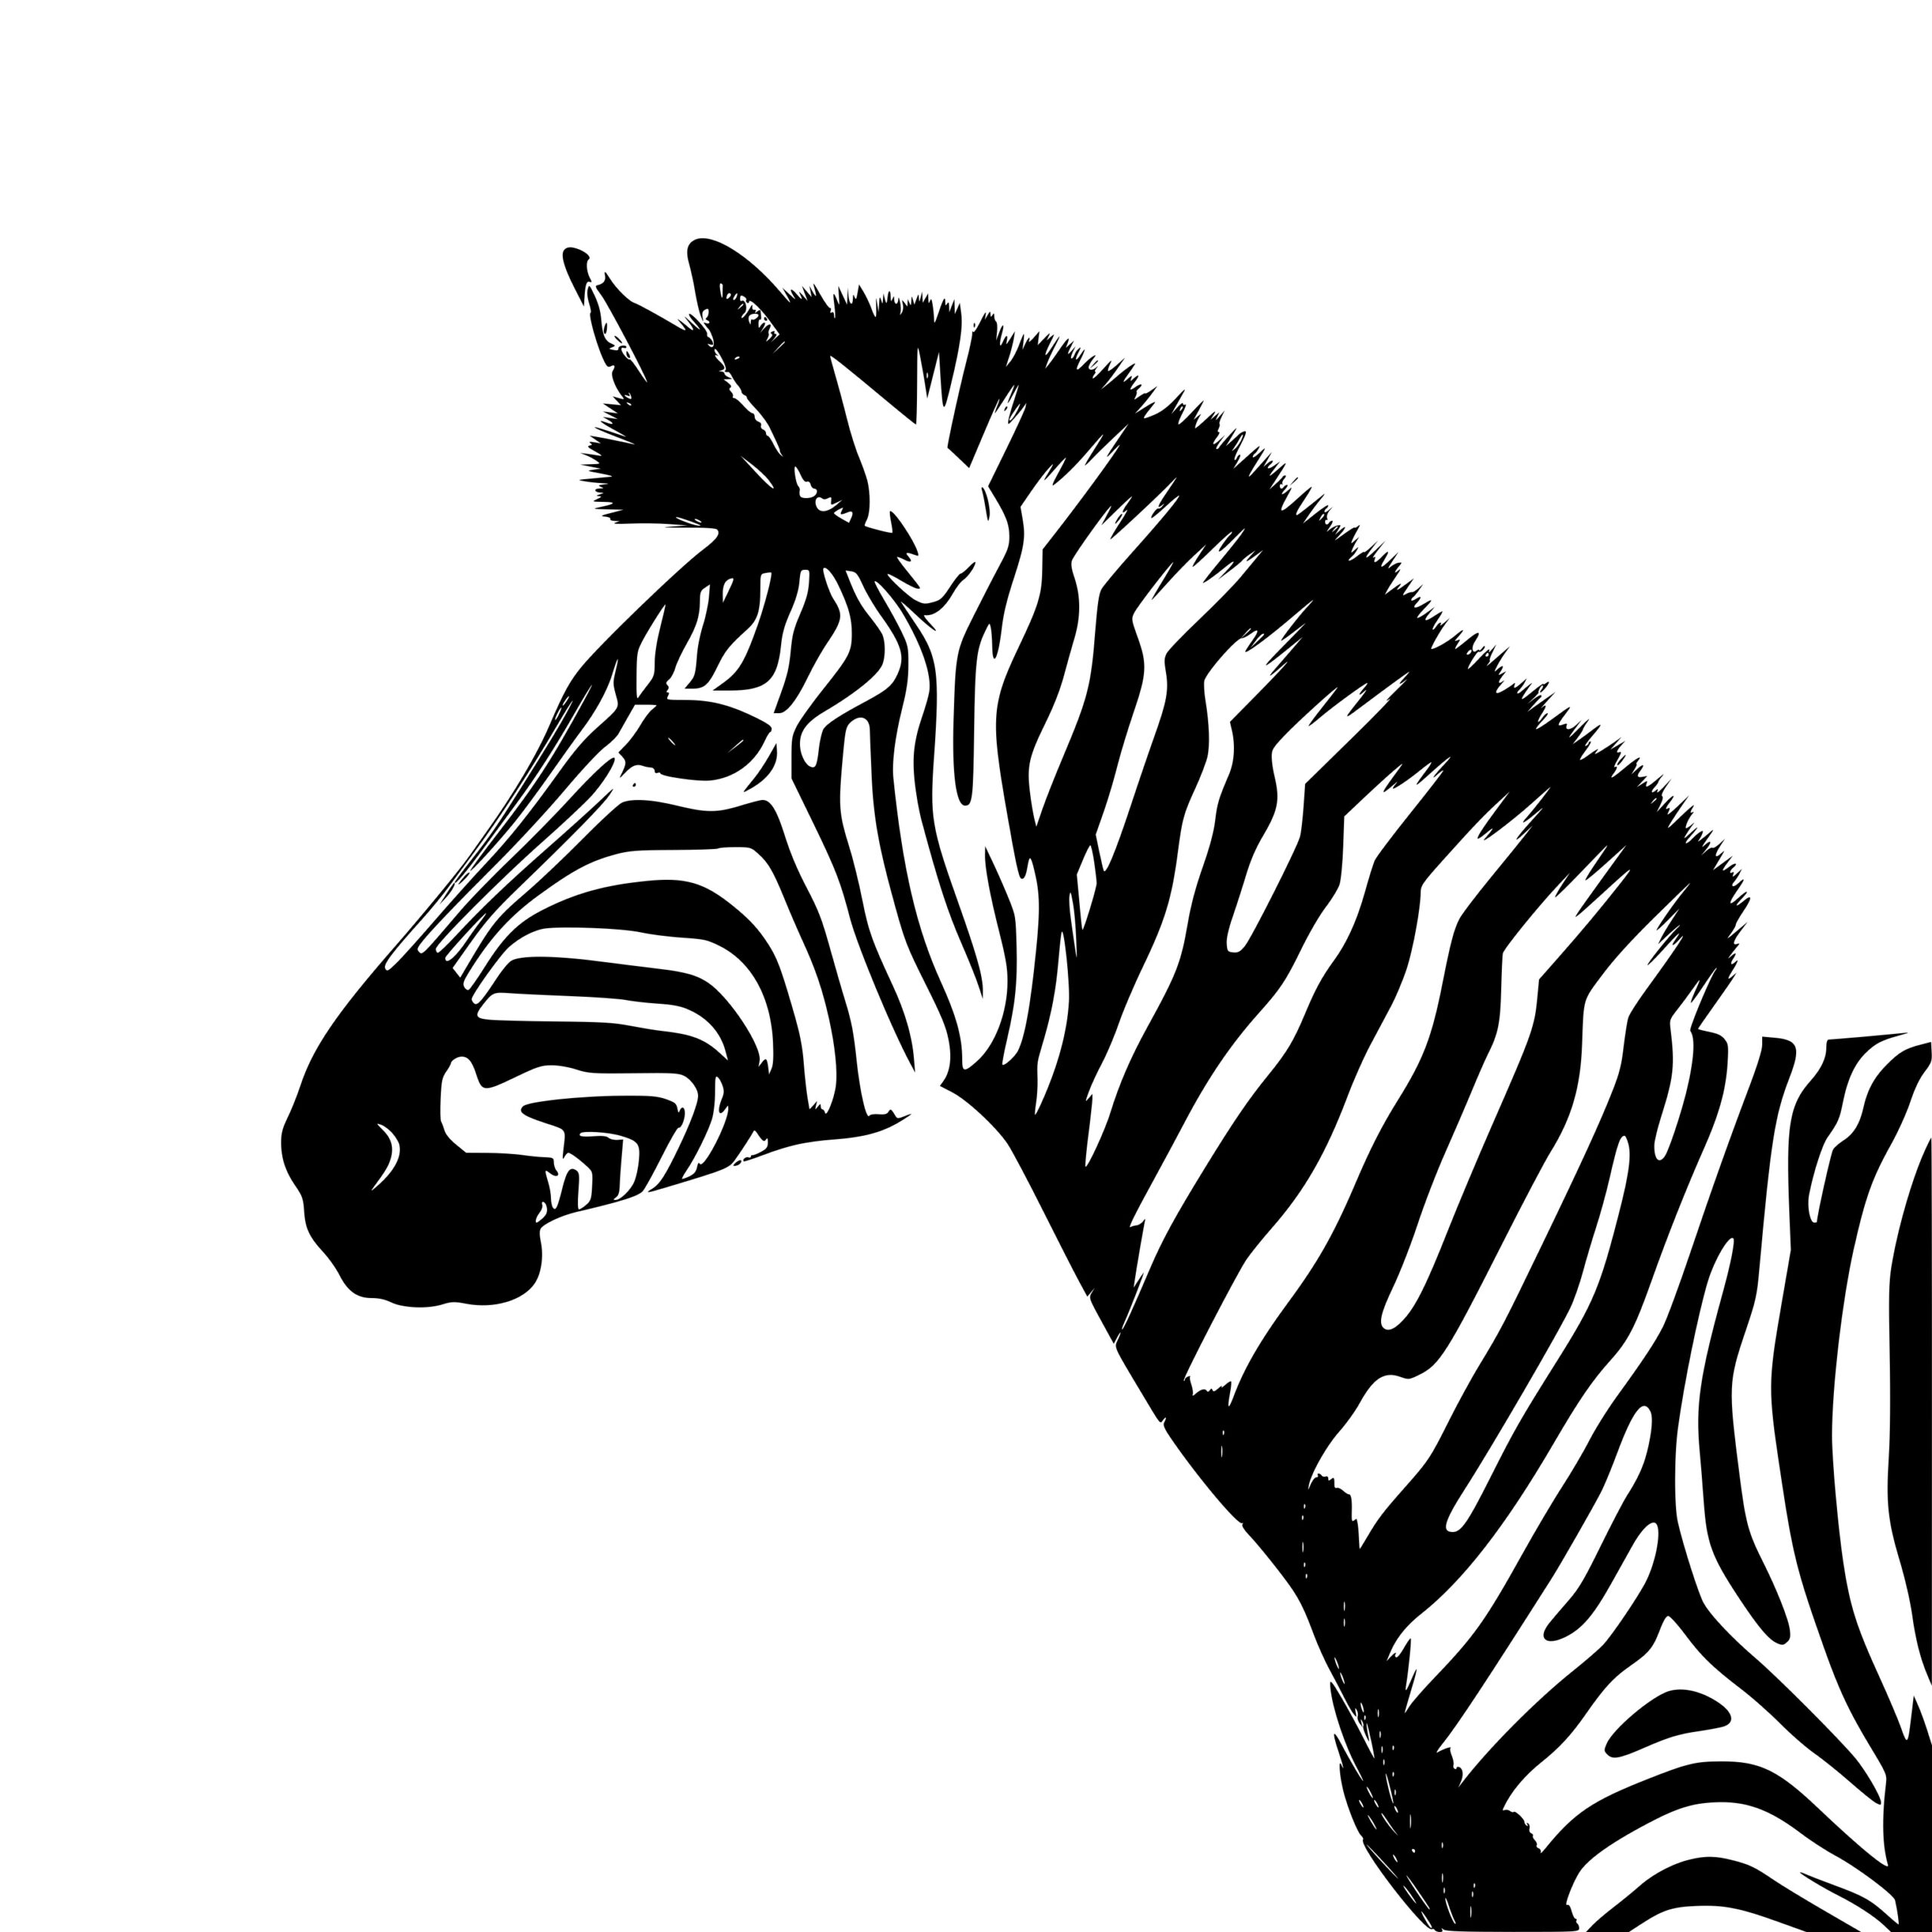 Zebra Sideways SVG Image for Cricut, Silhouette, Laser Machines